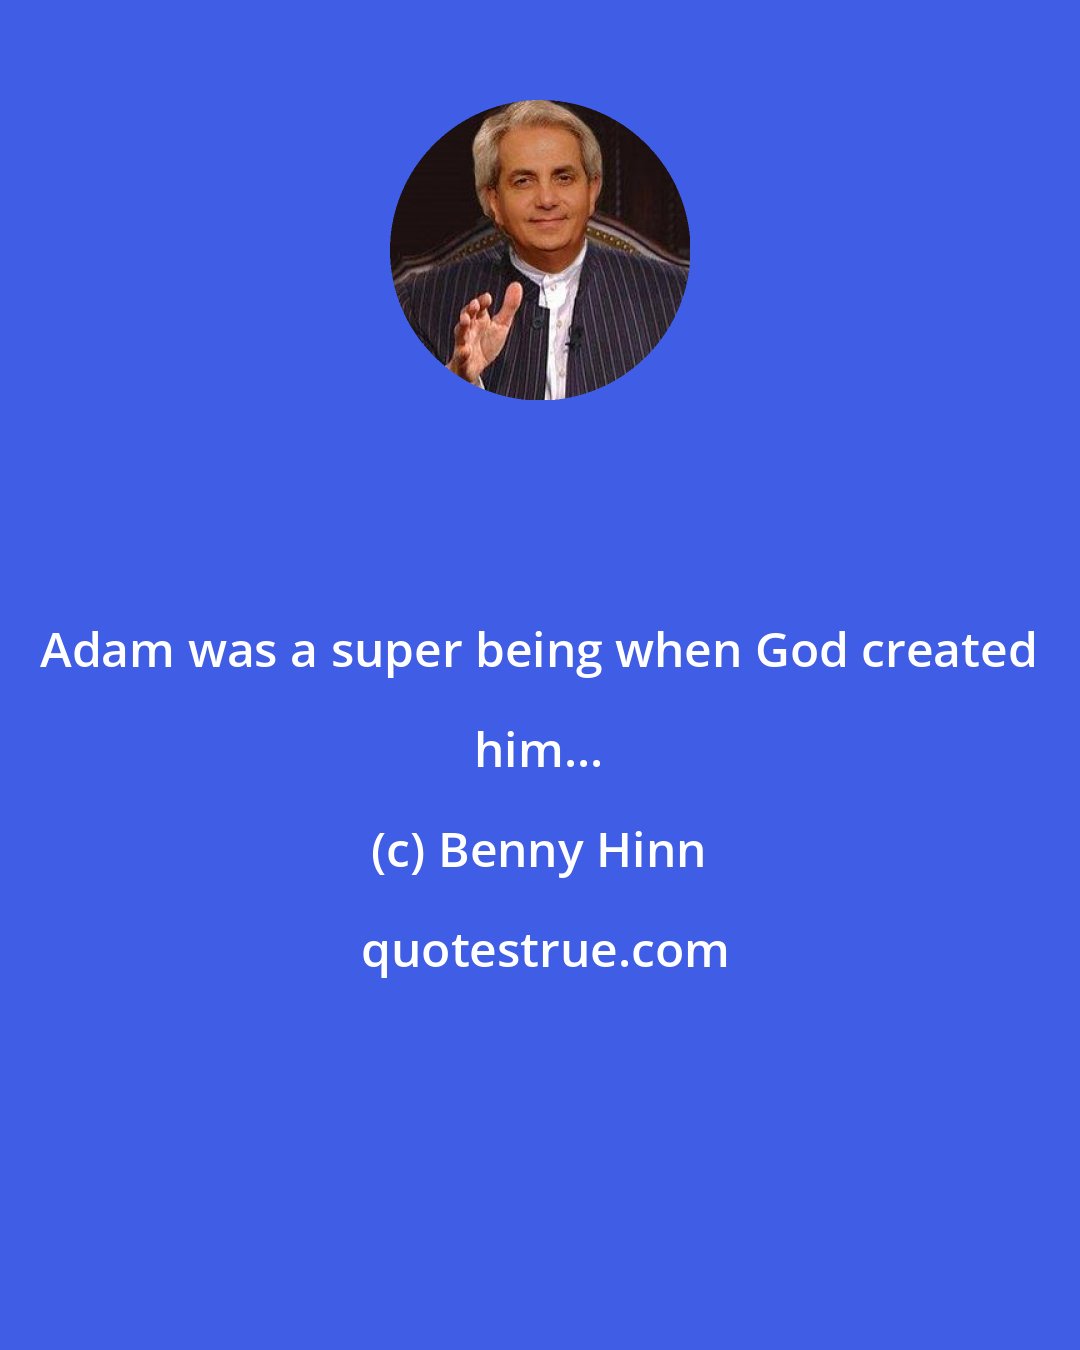 Benny Hinn: Adam was a super being when God created him...